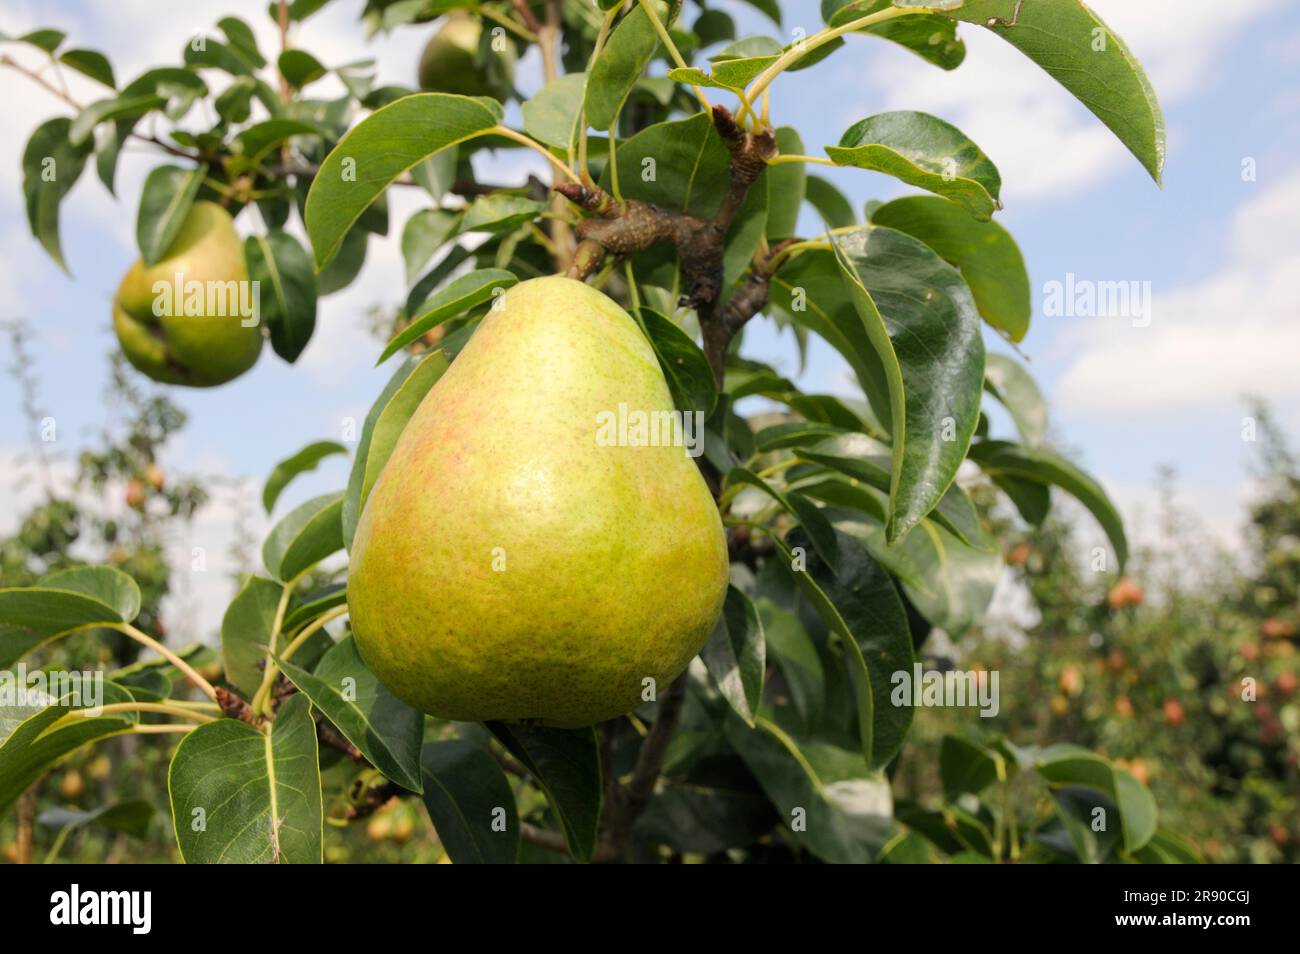 Pears Erica on tree (Pyrus communis) Stock Photo